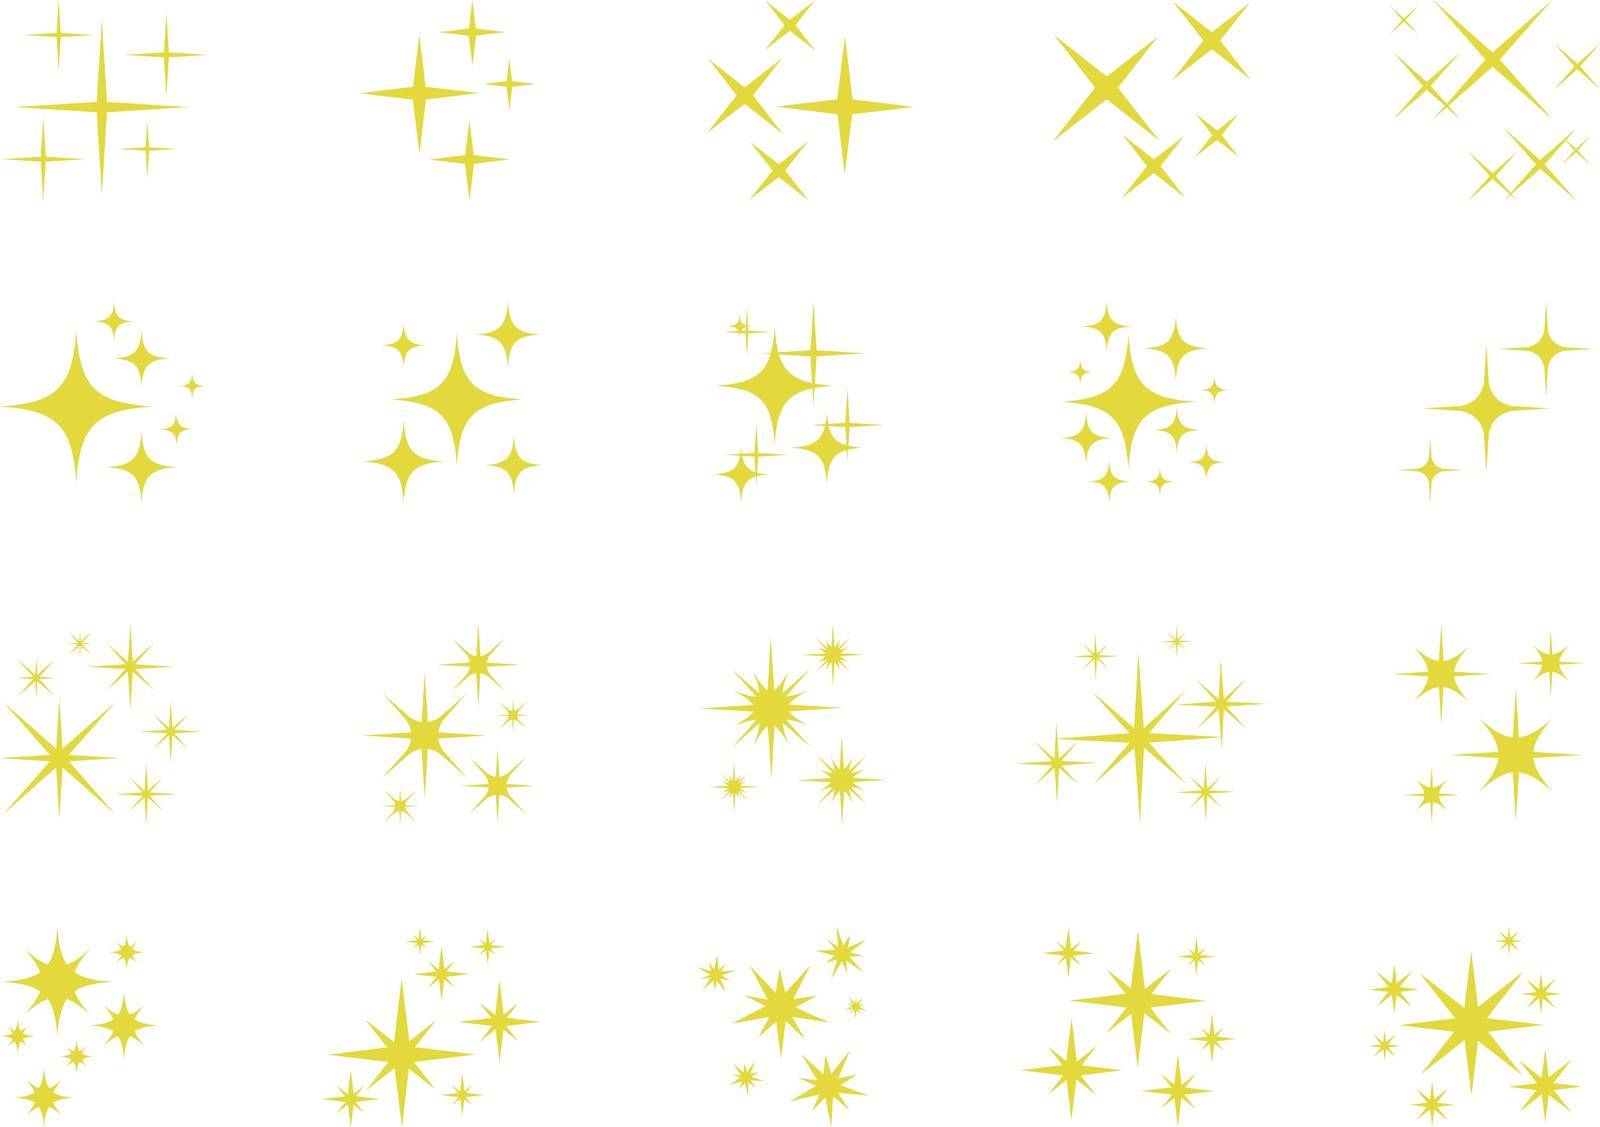 Sparkling holiday stars, glittering sparks and sparkling elements - illustration